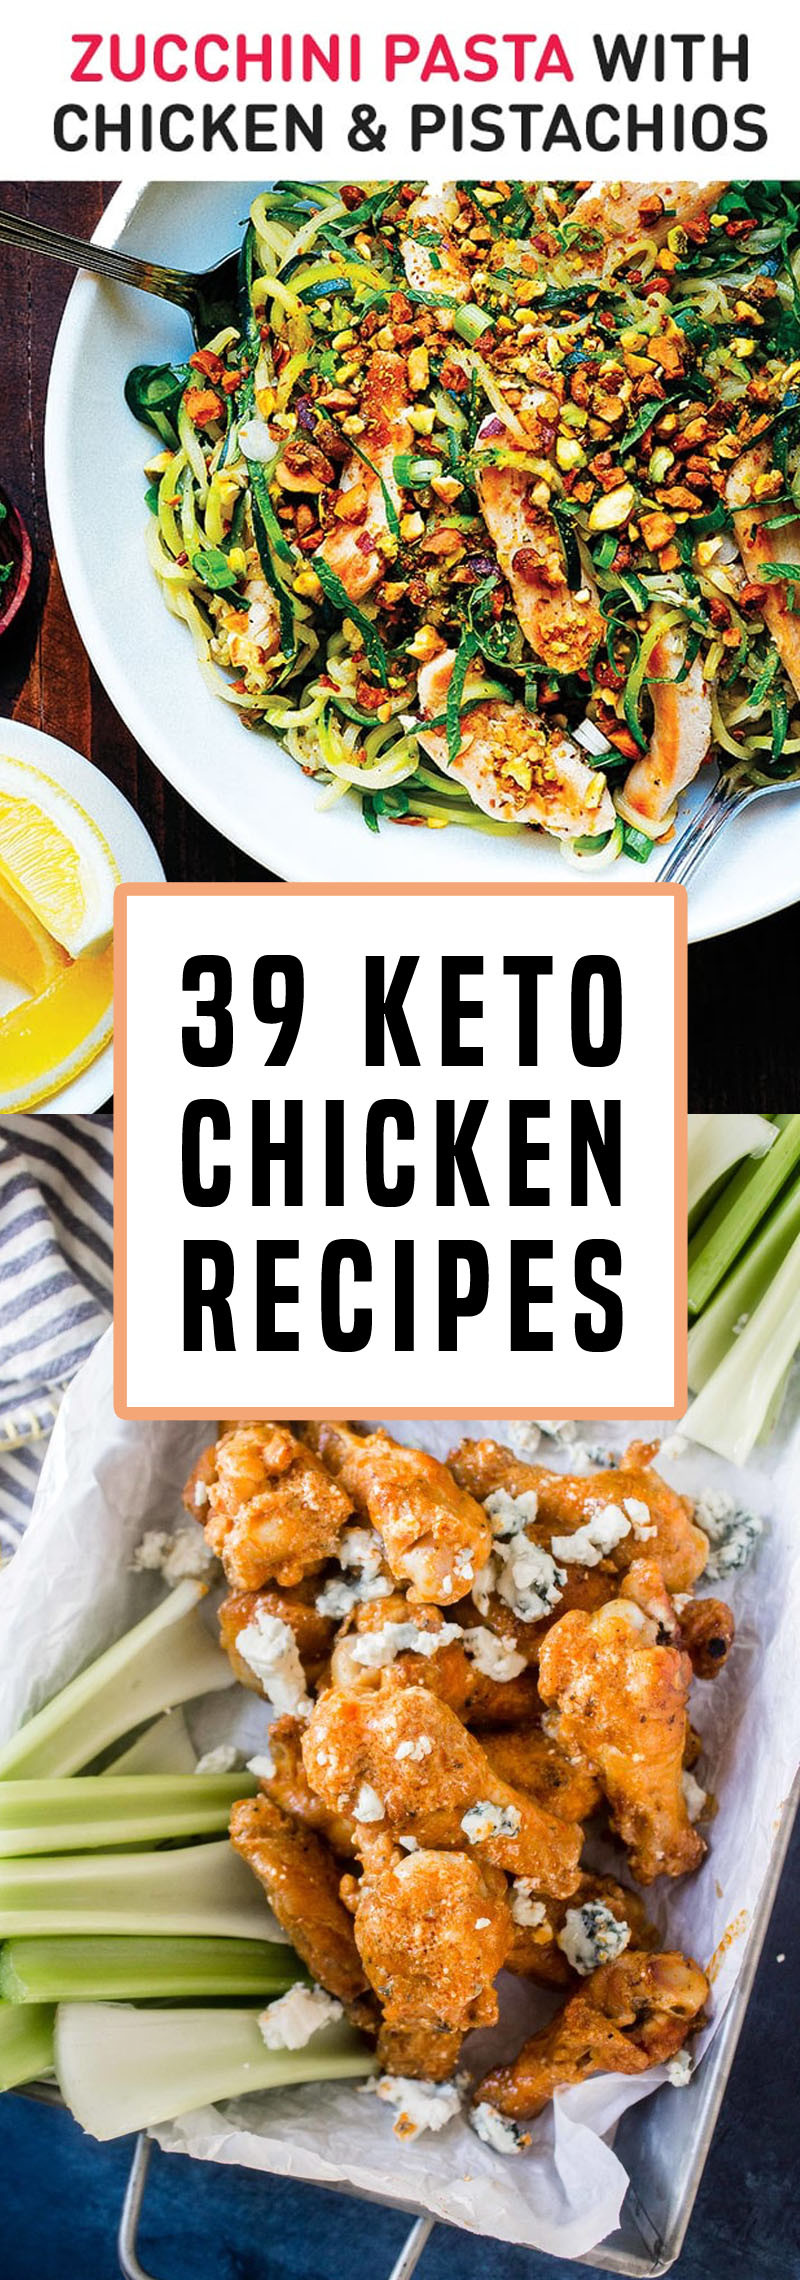 Keto Diet Recipes Chicken
 39 Keto Chicken Recipes That Are Super High Protein & Low